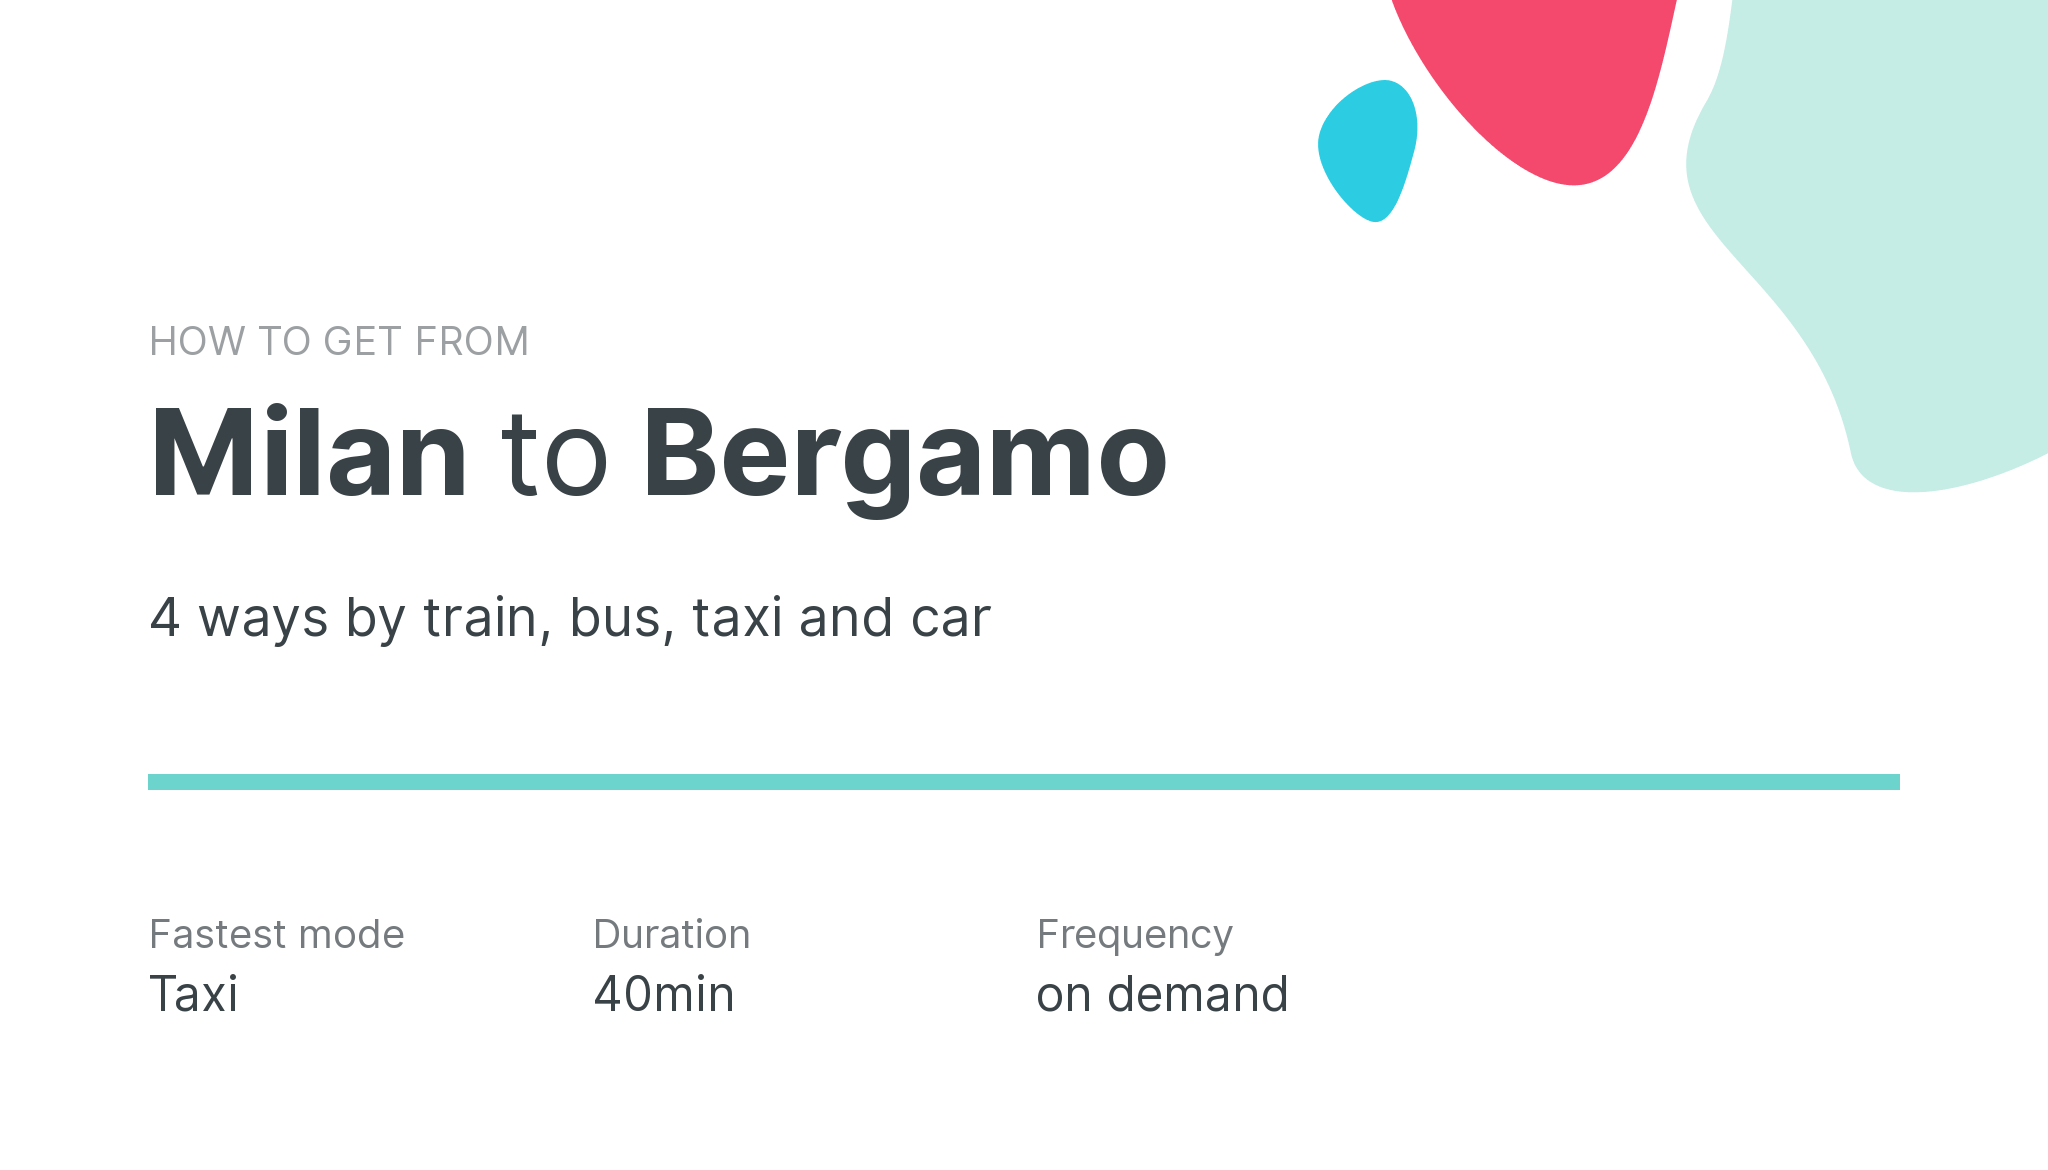 How do I get from Milan to Bergamo